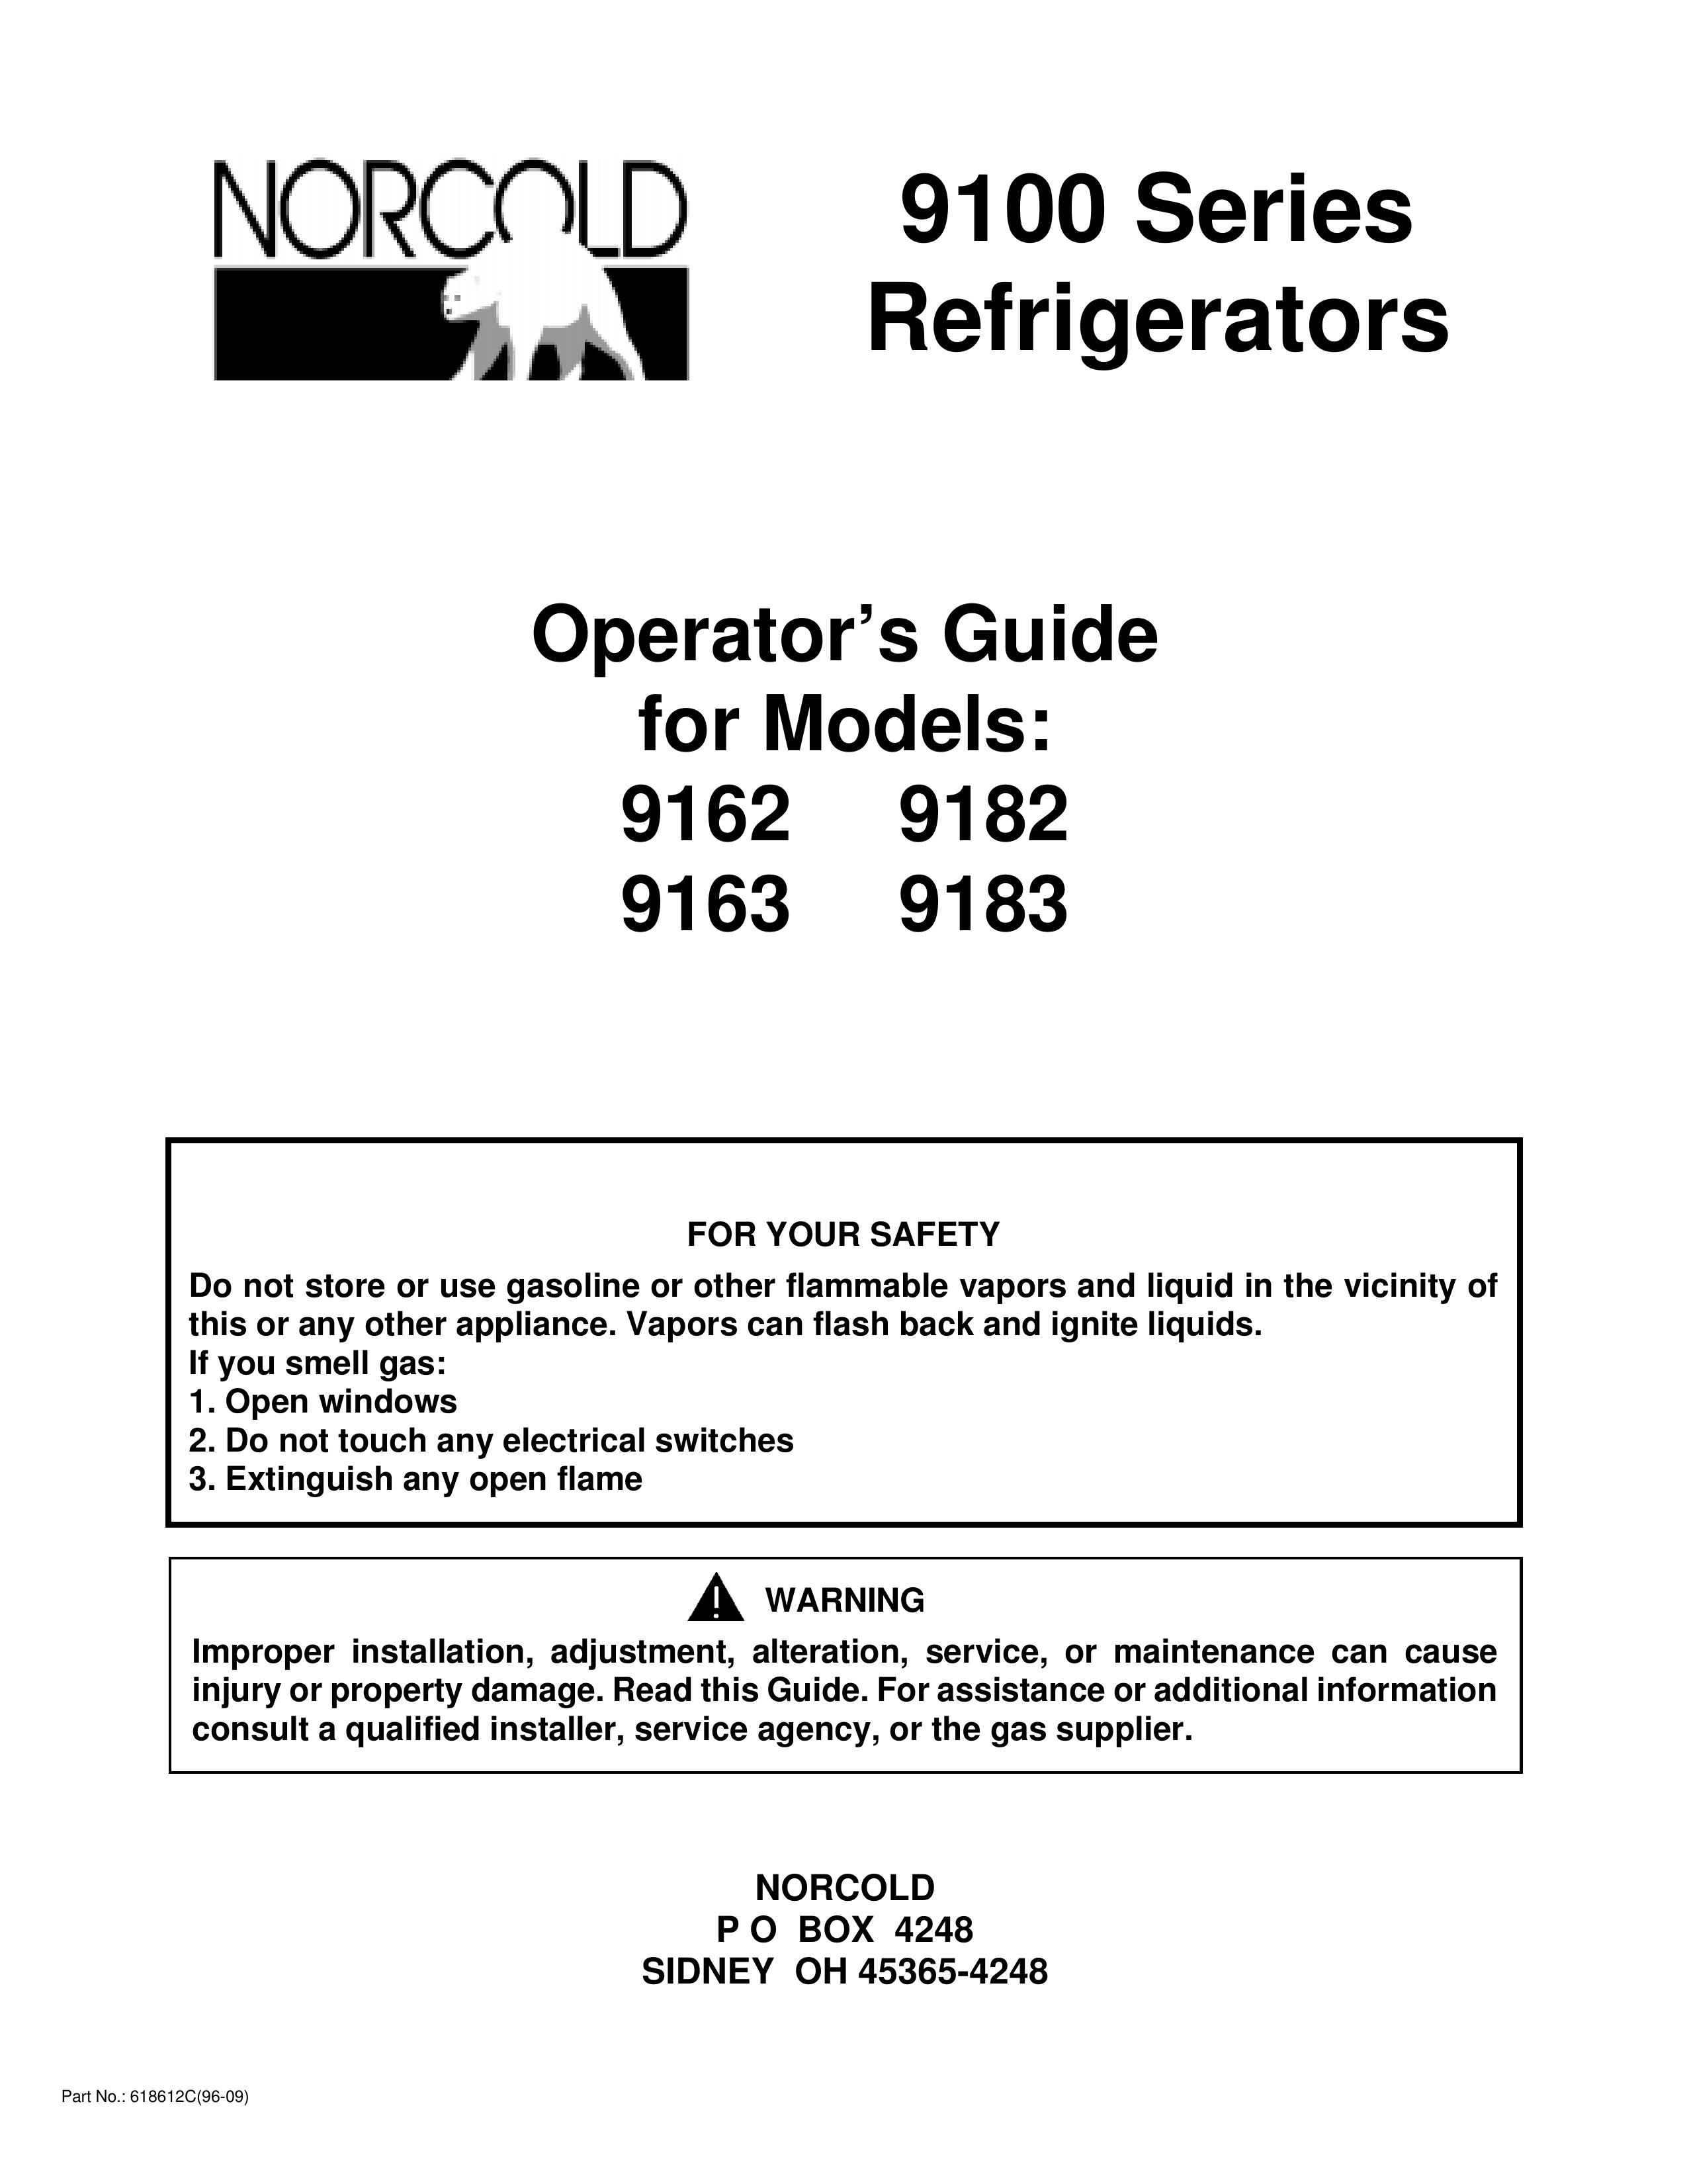 Norcold 9183 Refrigerator User Manual